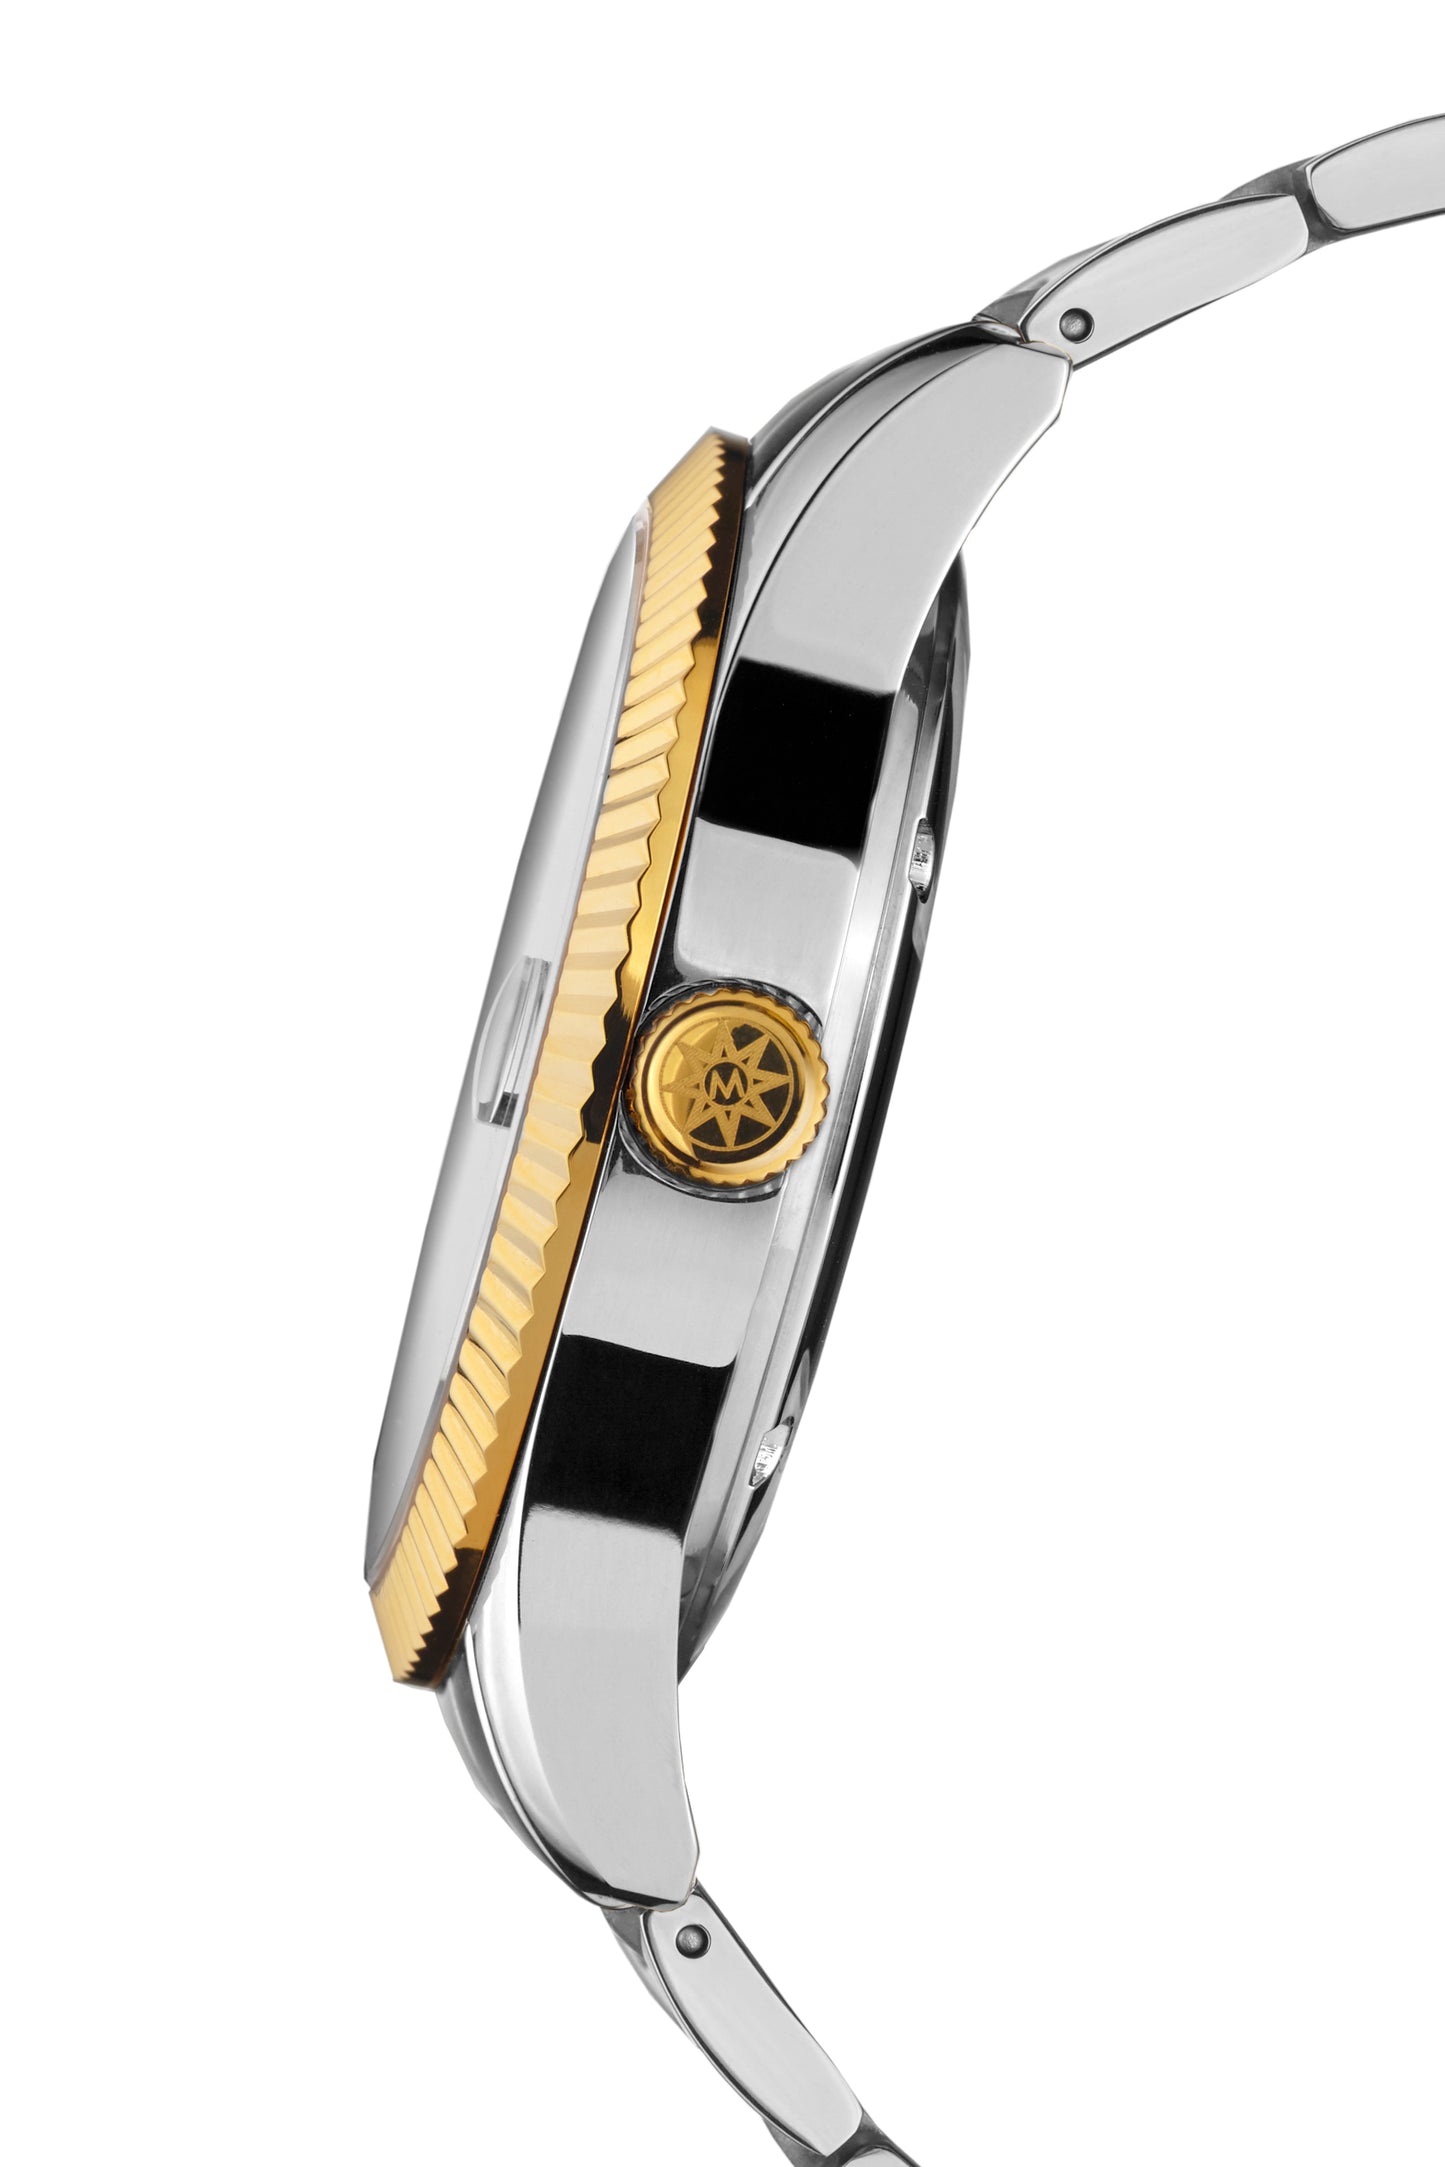 Automatic watches — Héritage — Mathis Montabon — bicolor silver